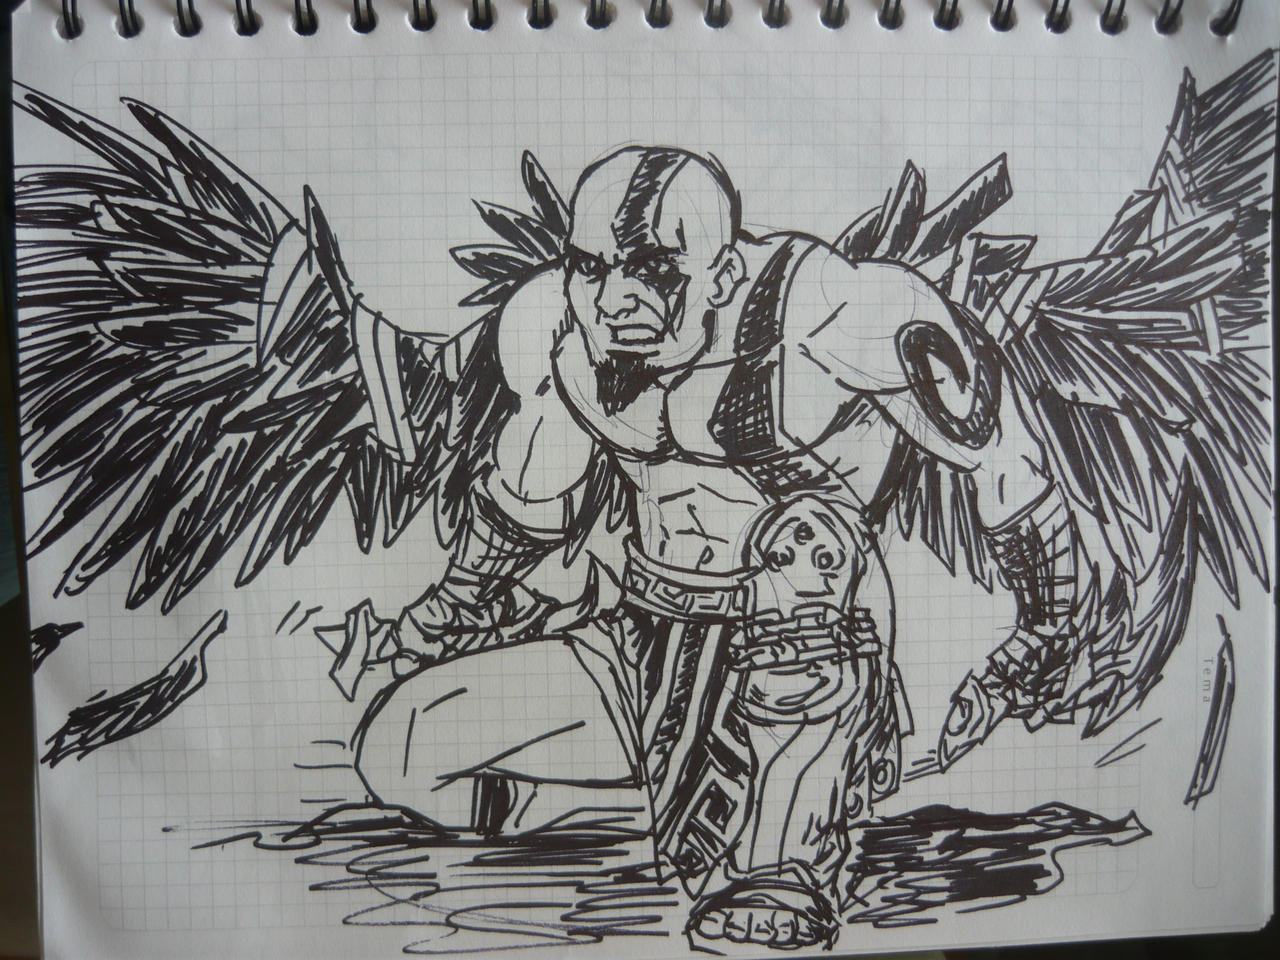 Kratos y Tyr by wingzerox86 on DeviantArt